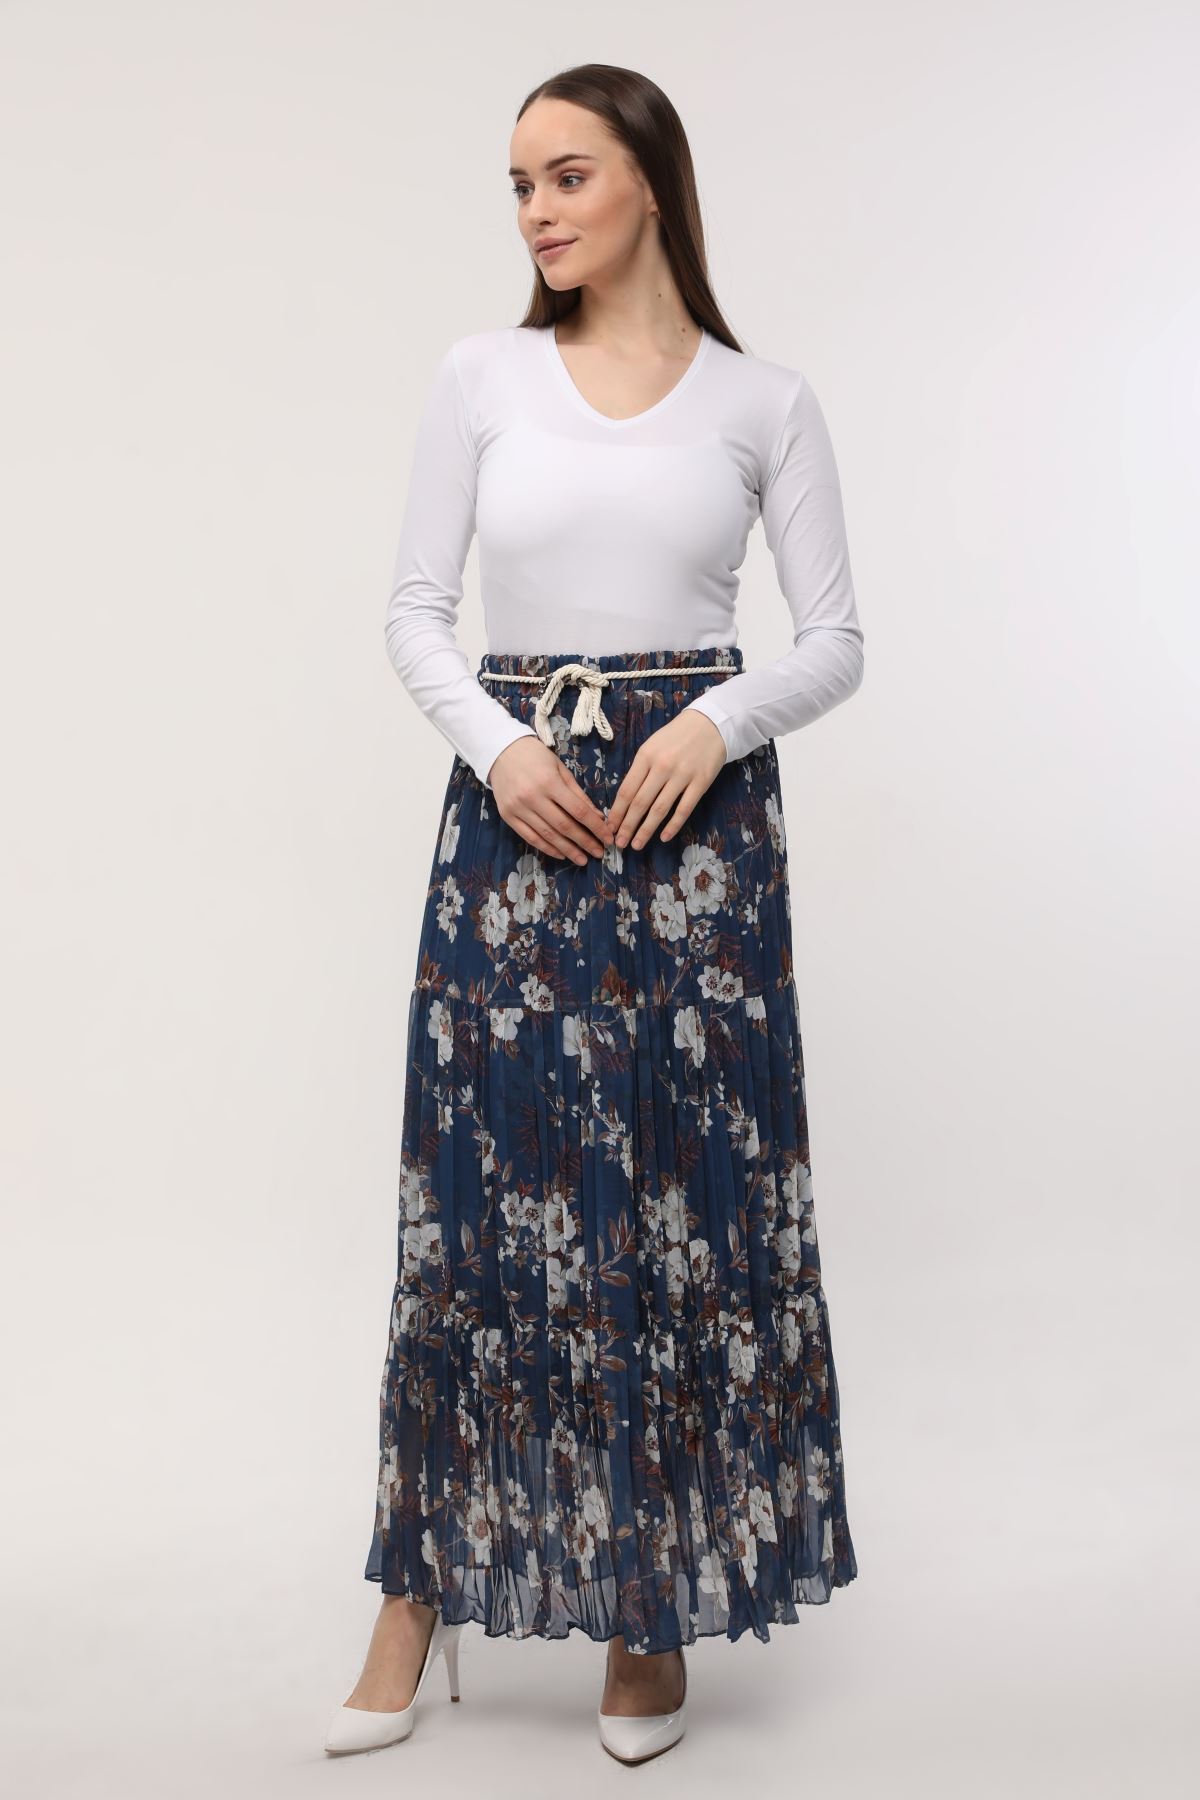 Flower Patterned Chiffon Women's Skirt